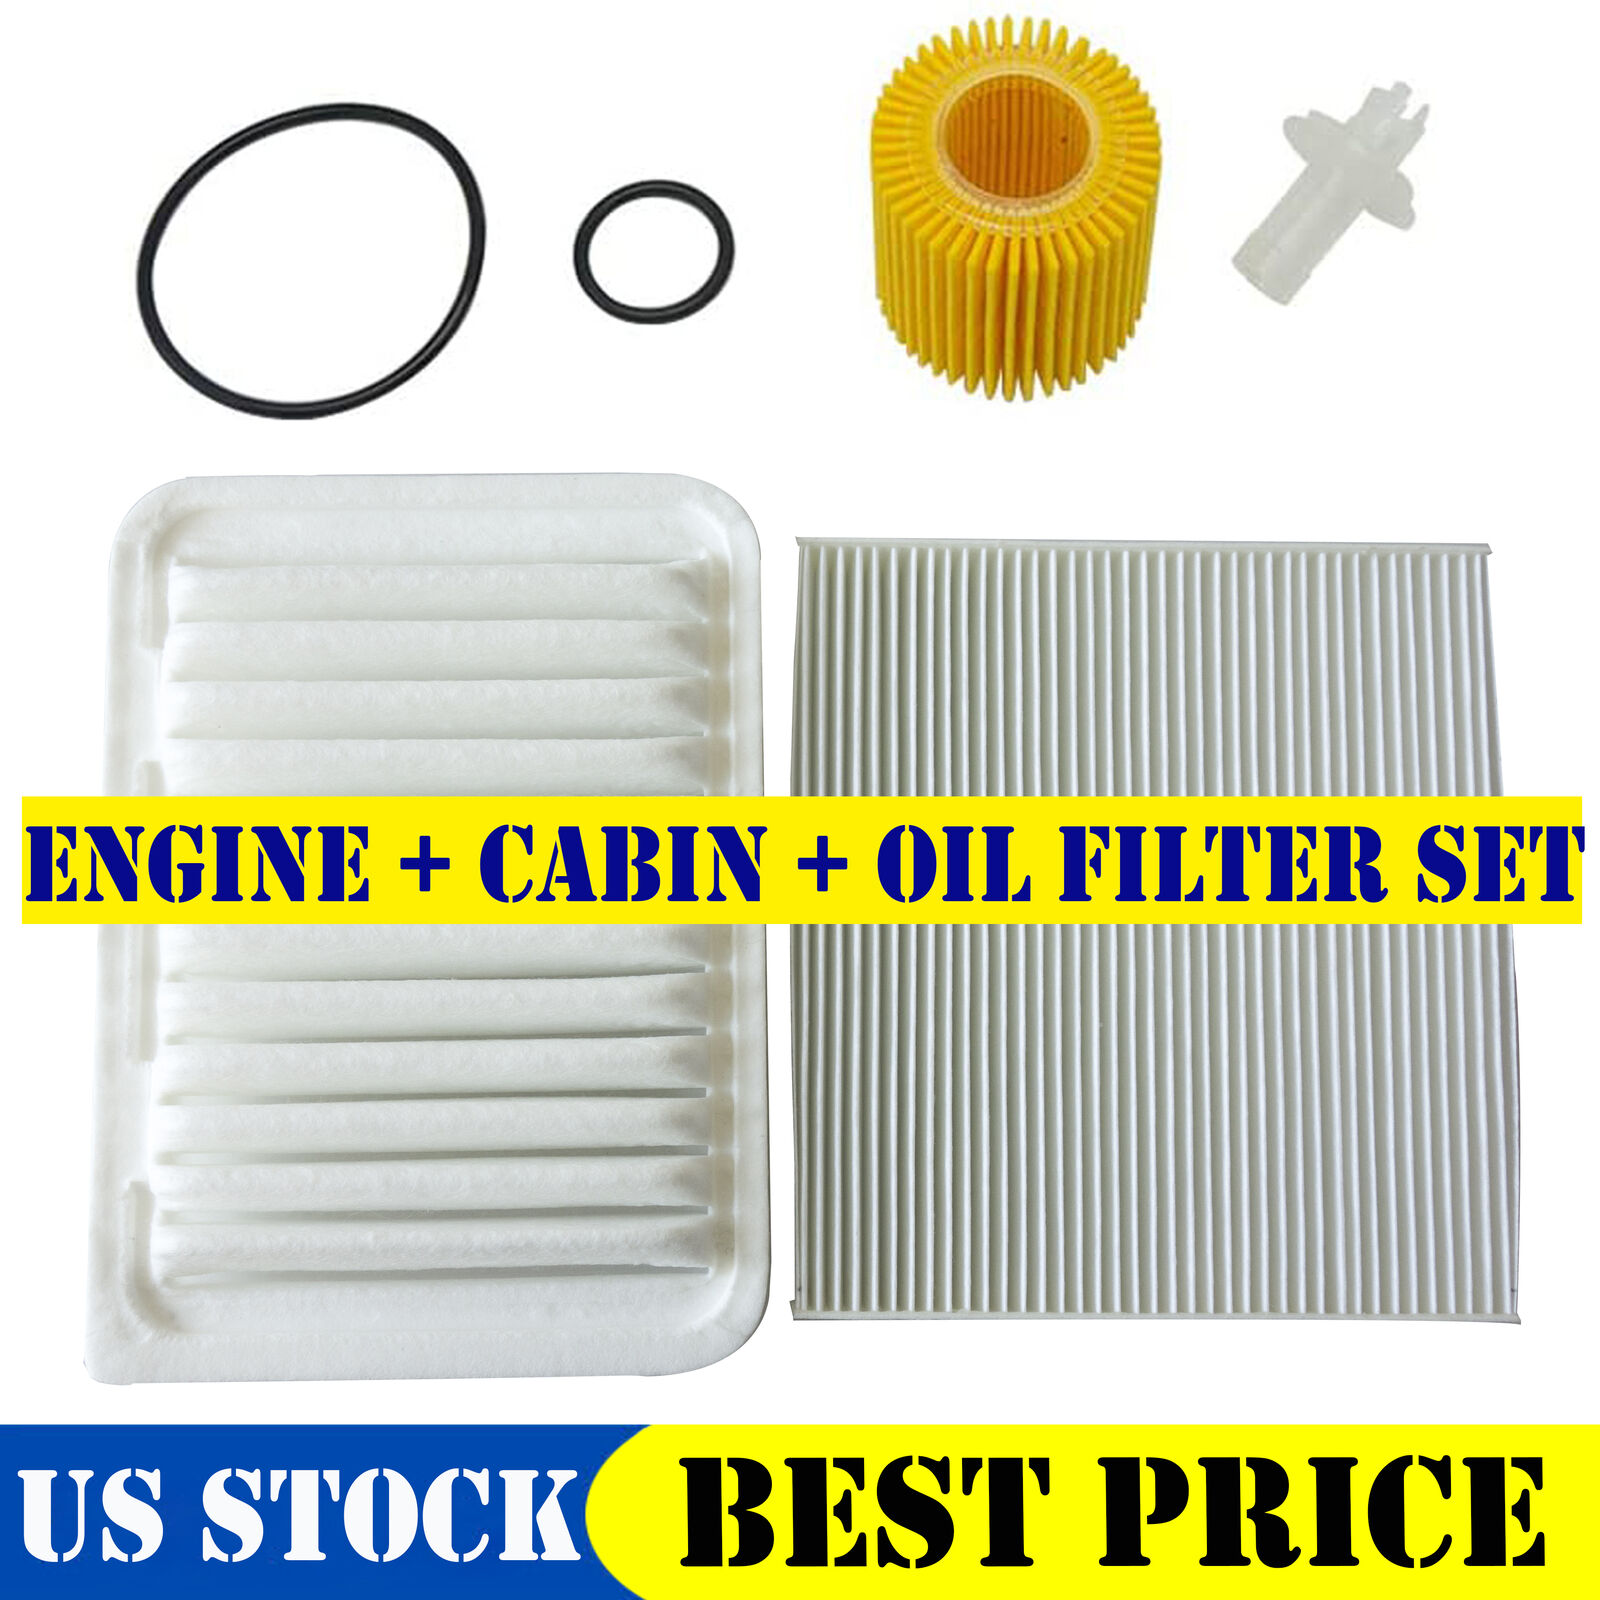 Cabin Air filter + Engine Air filter + Oil Filter for Corolla Matrix Yaris Vibe